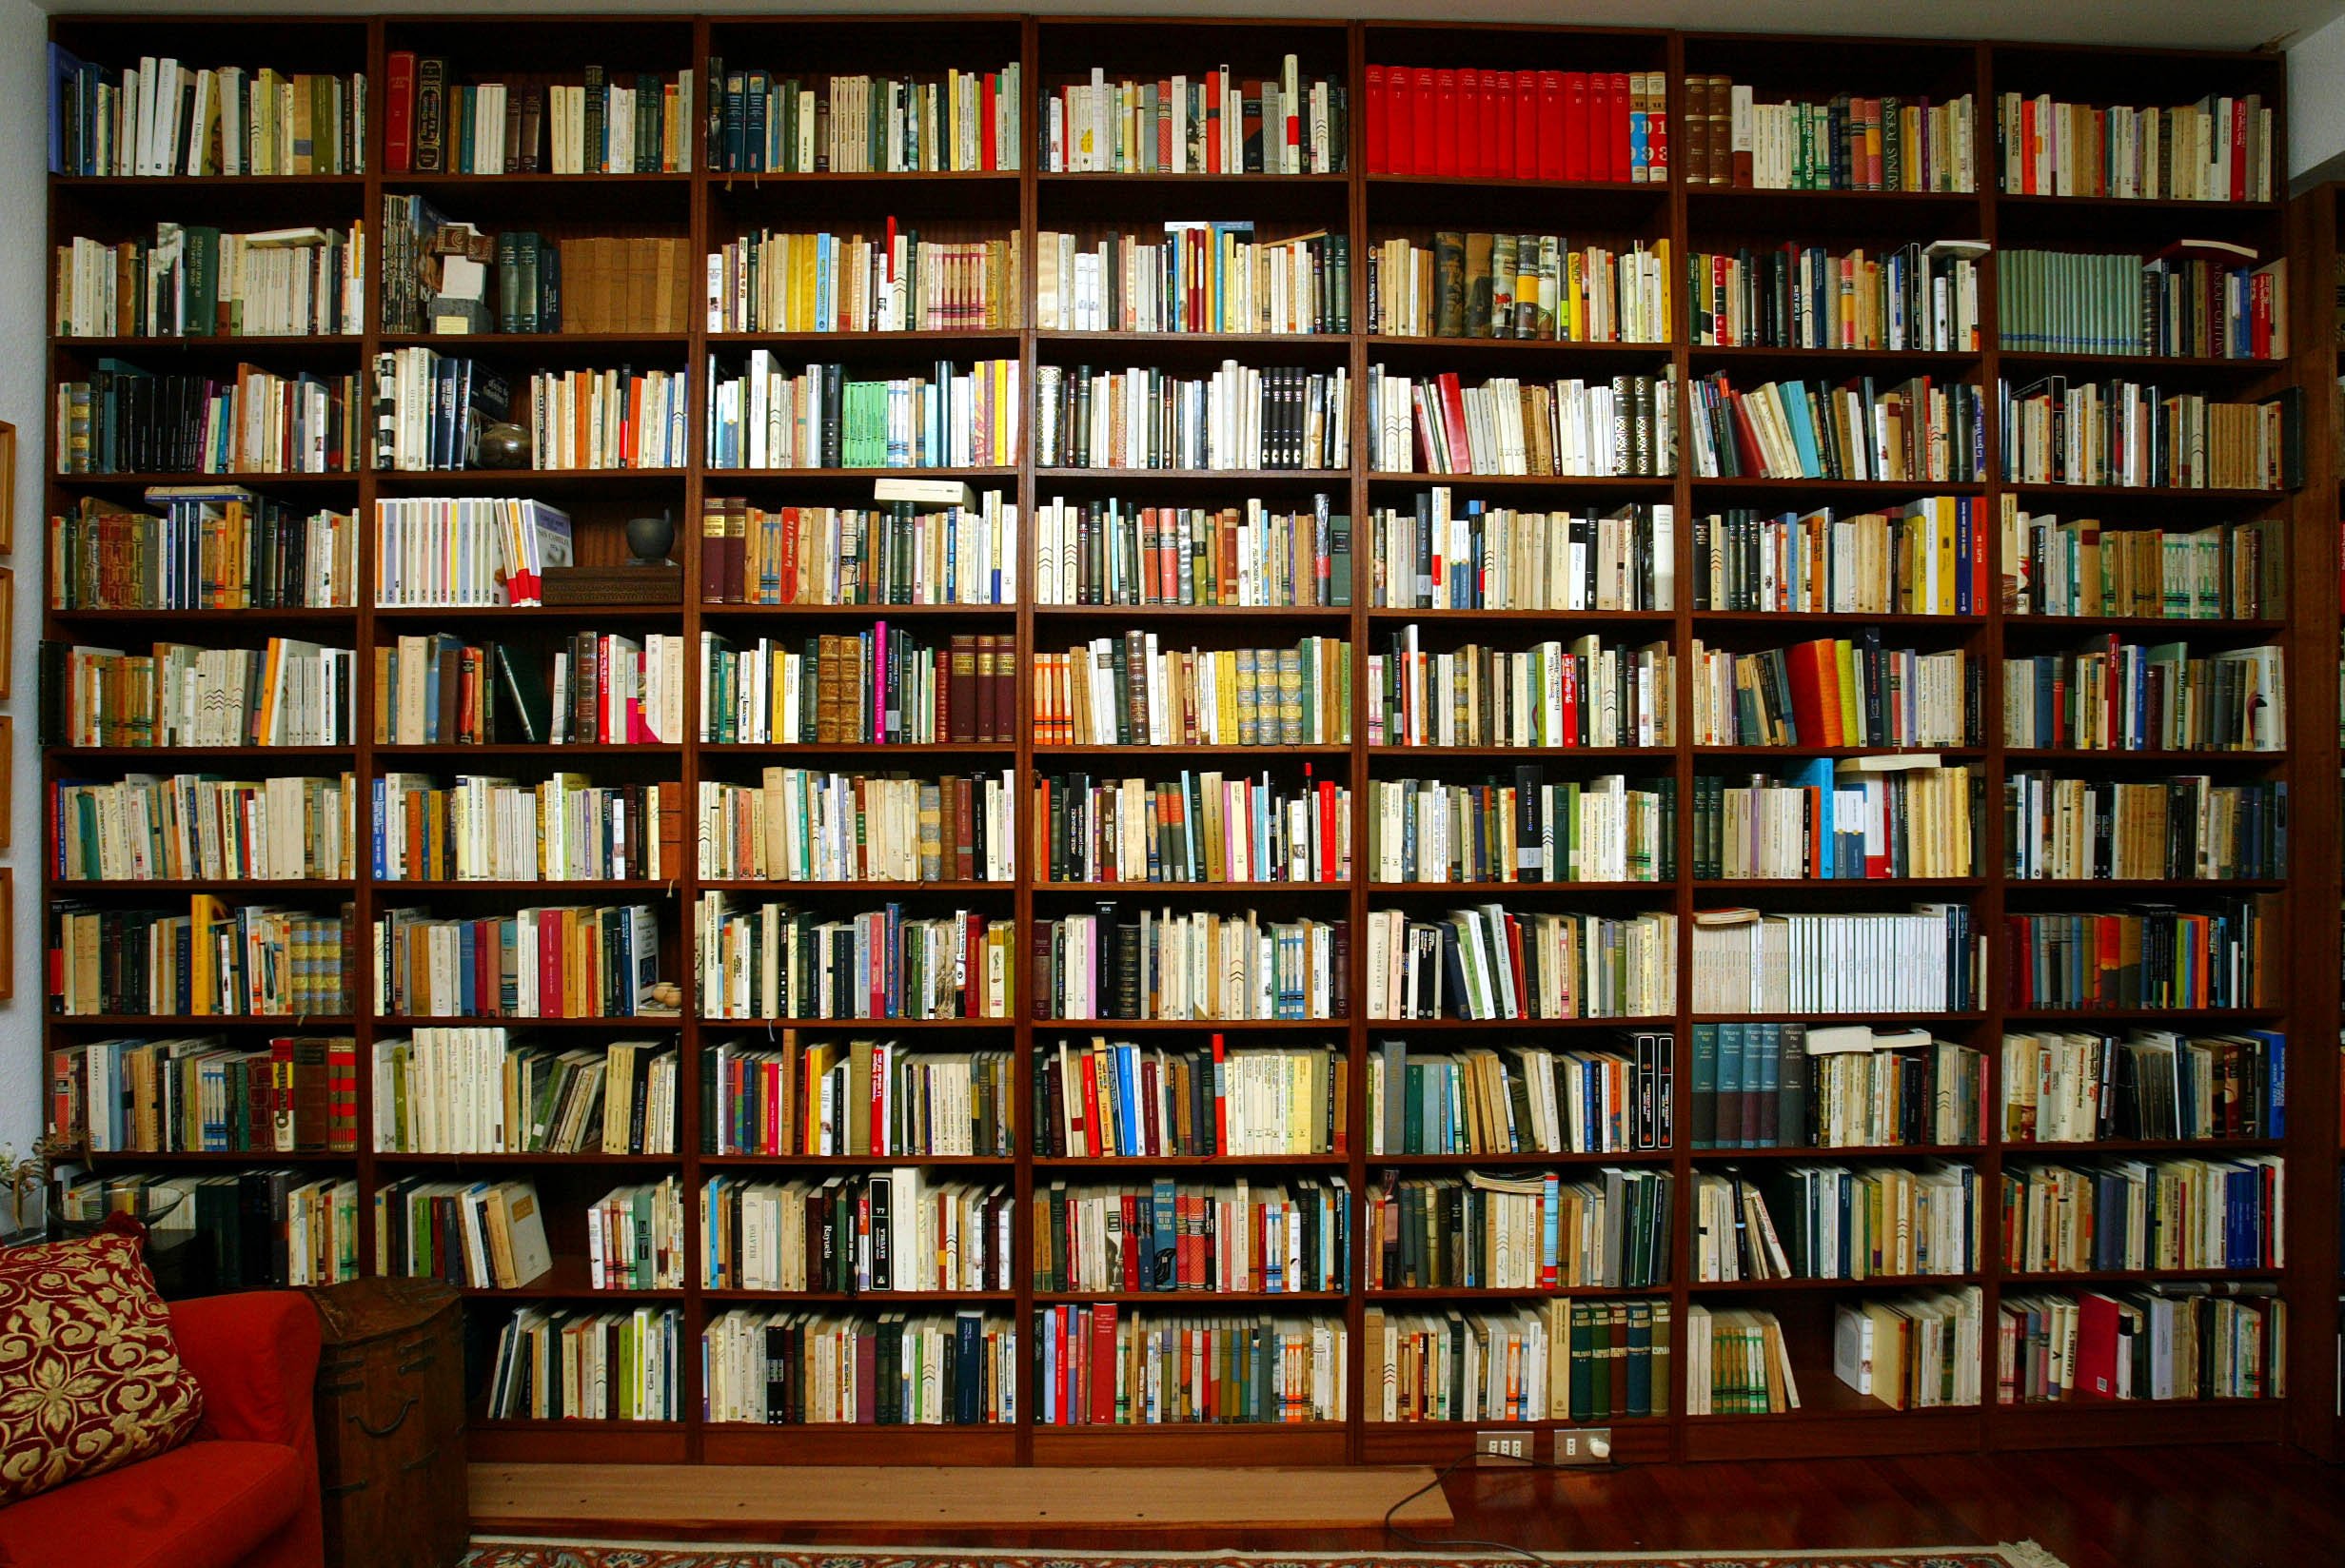 Books wordwall. Книжные полки. Стеллажи для книг в библиотеку. Полка для книг. Библиотека полки.